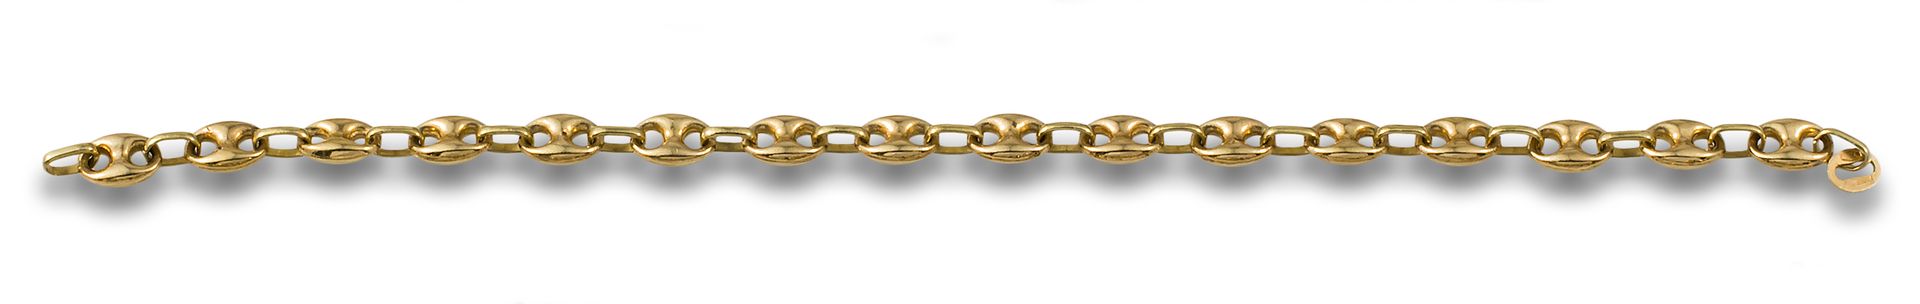 CALABROTE GOLD BRACELET Armband aus 18 Karat Gelbgold mit Kalebassenmuster (Vers&hellip;